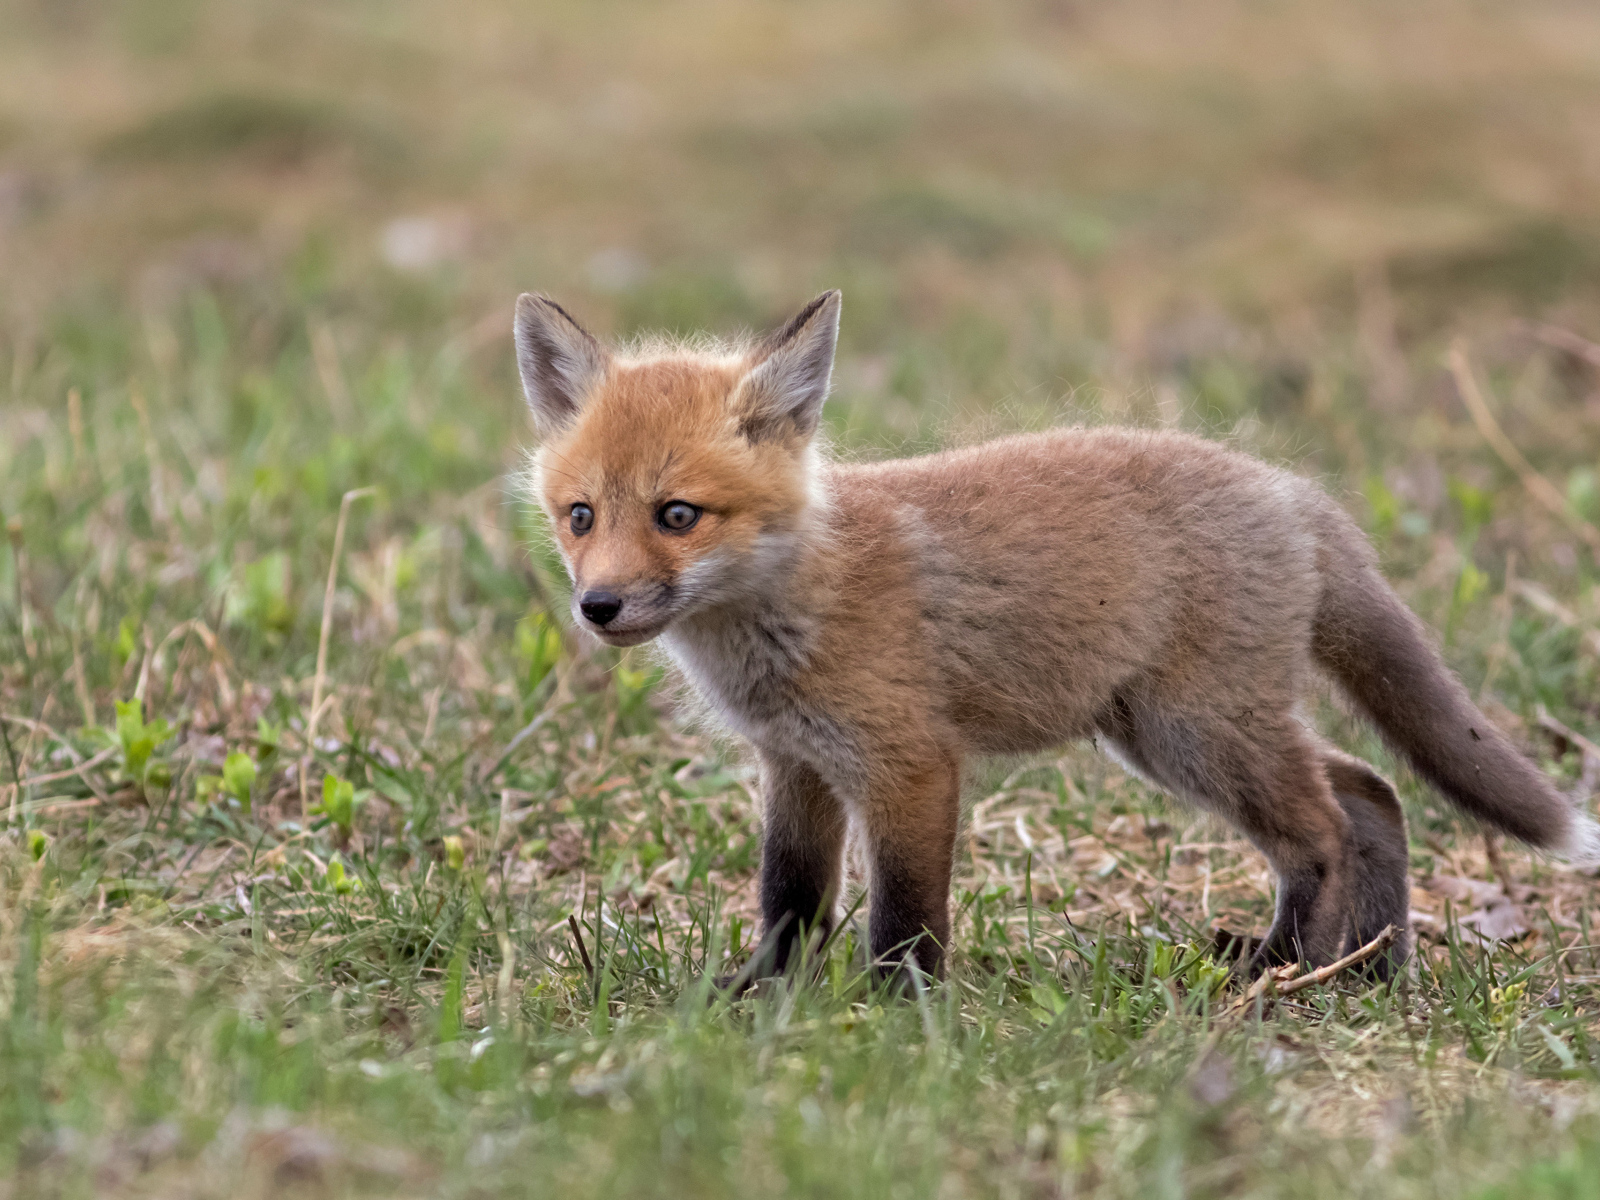 Little frightened fox on the grass